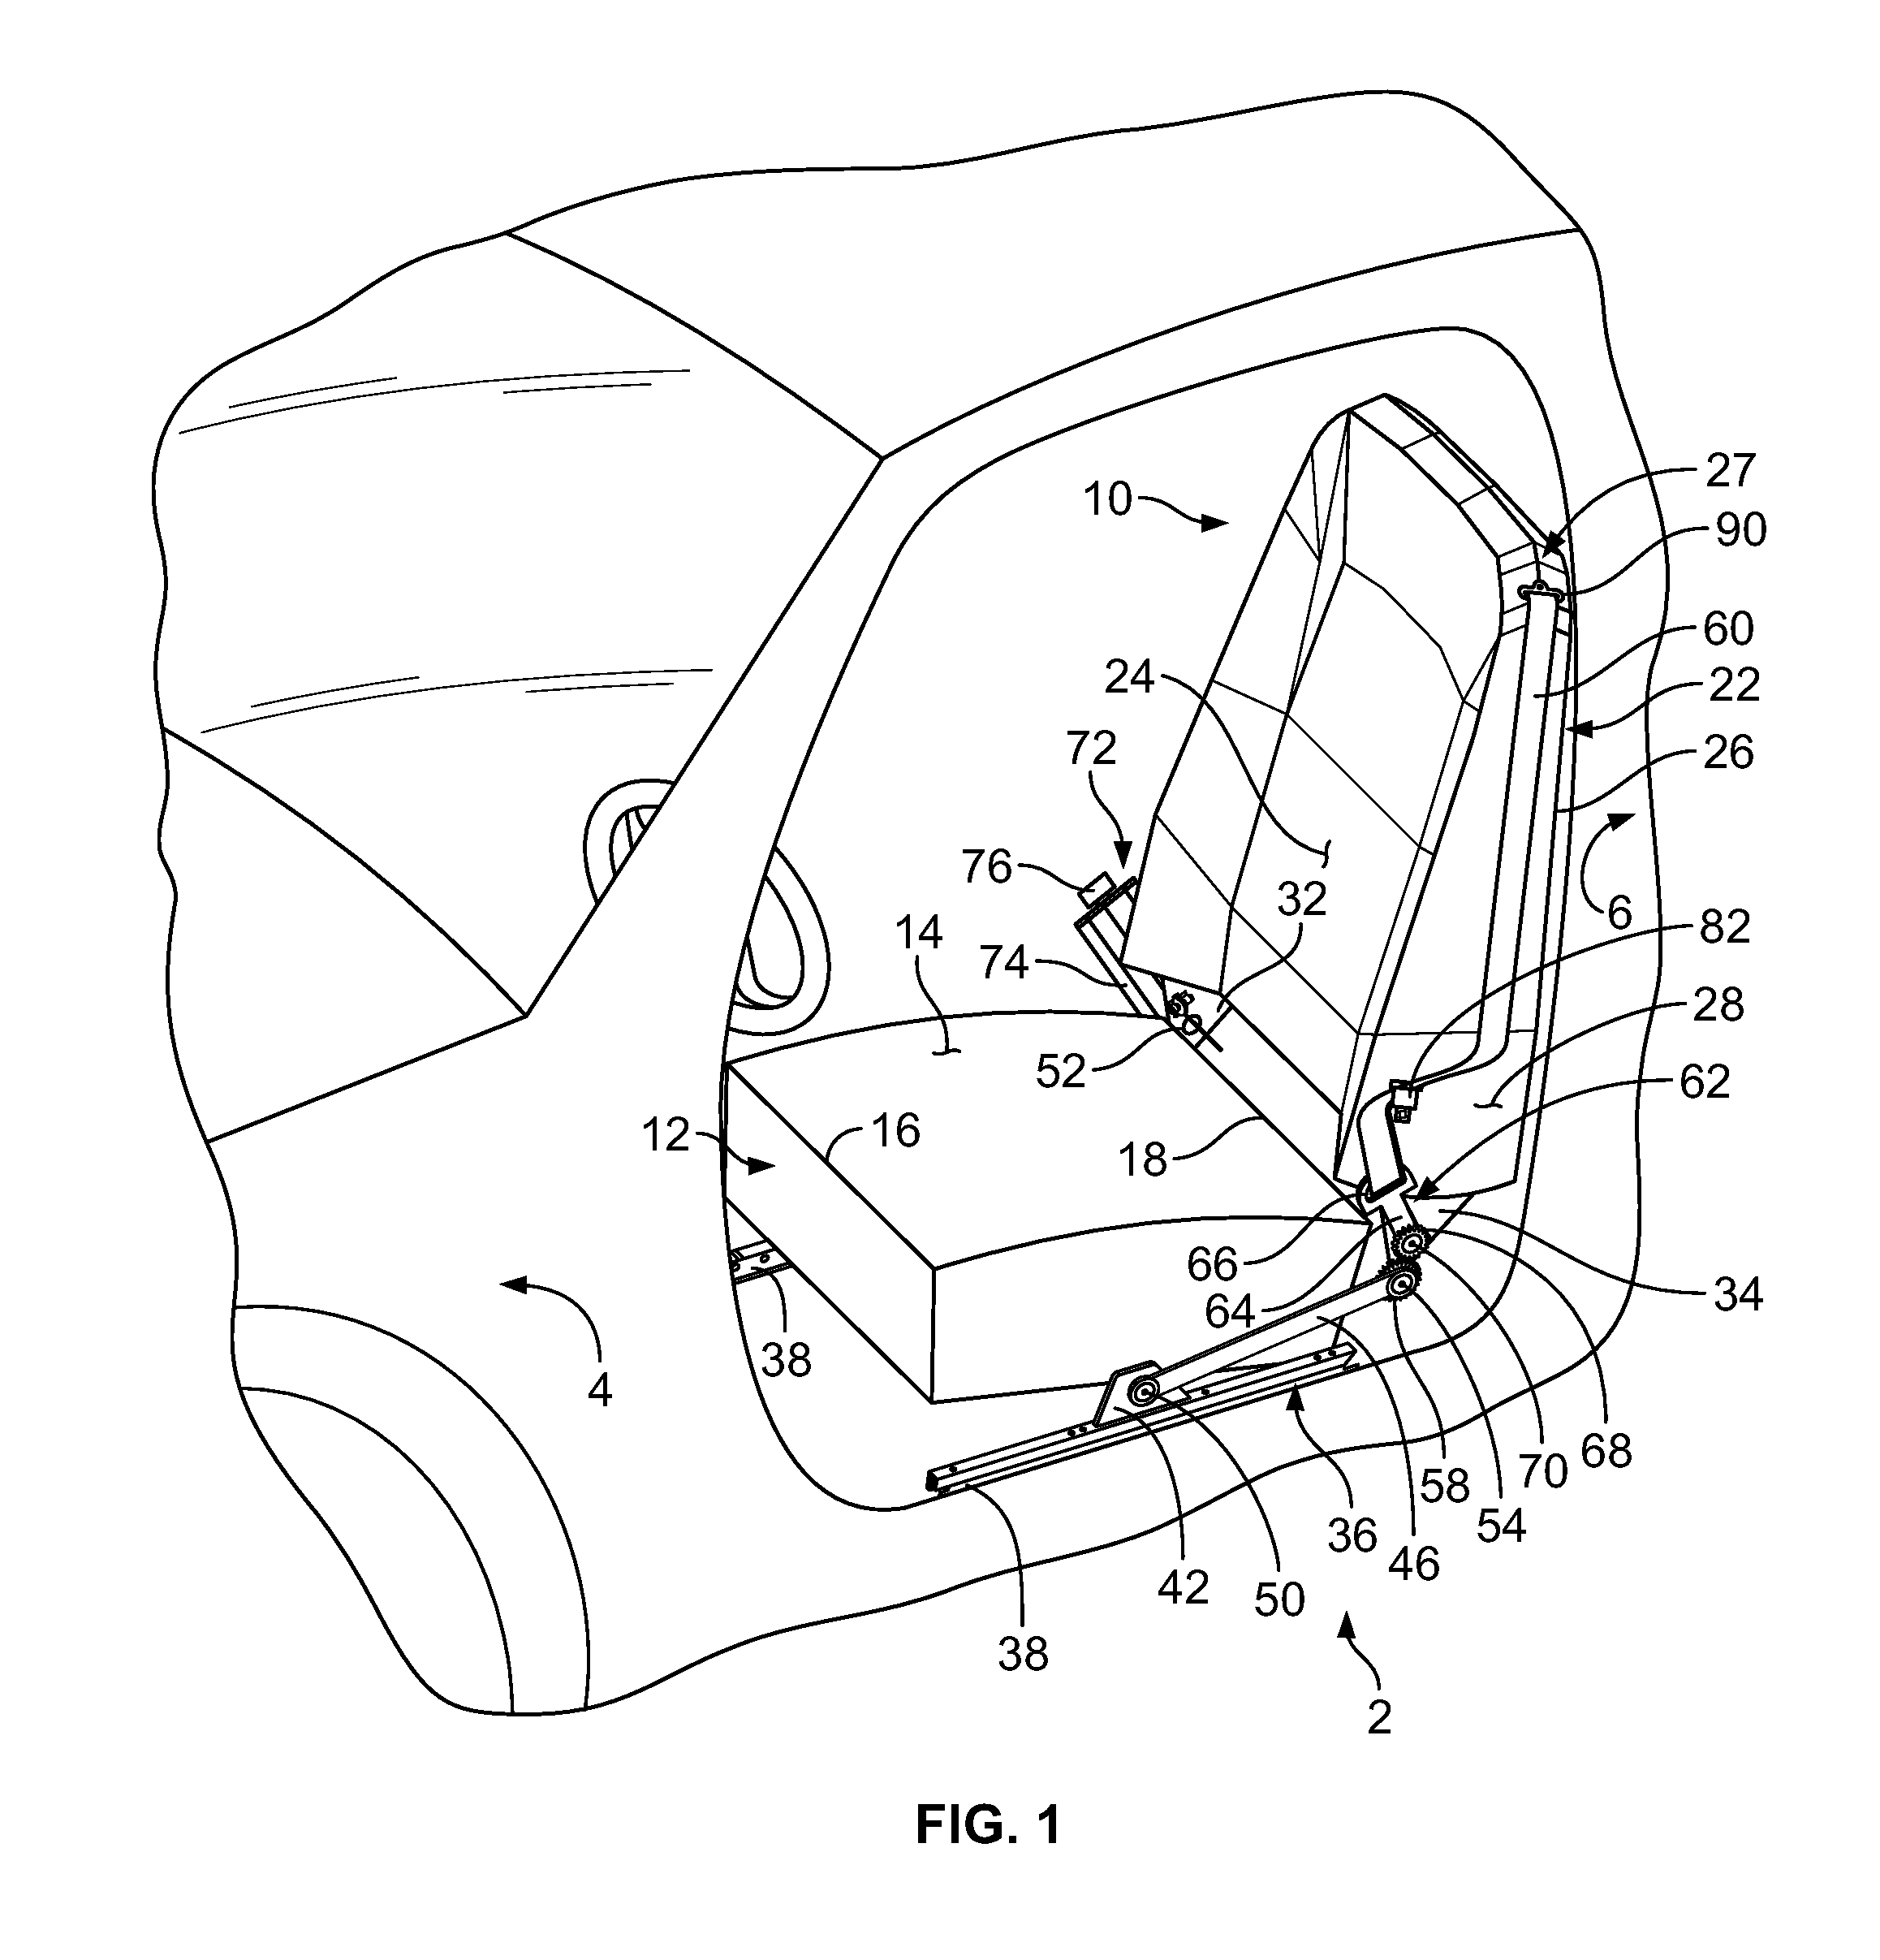 Seatbelt restraint system for reversible vehicle seat